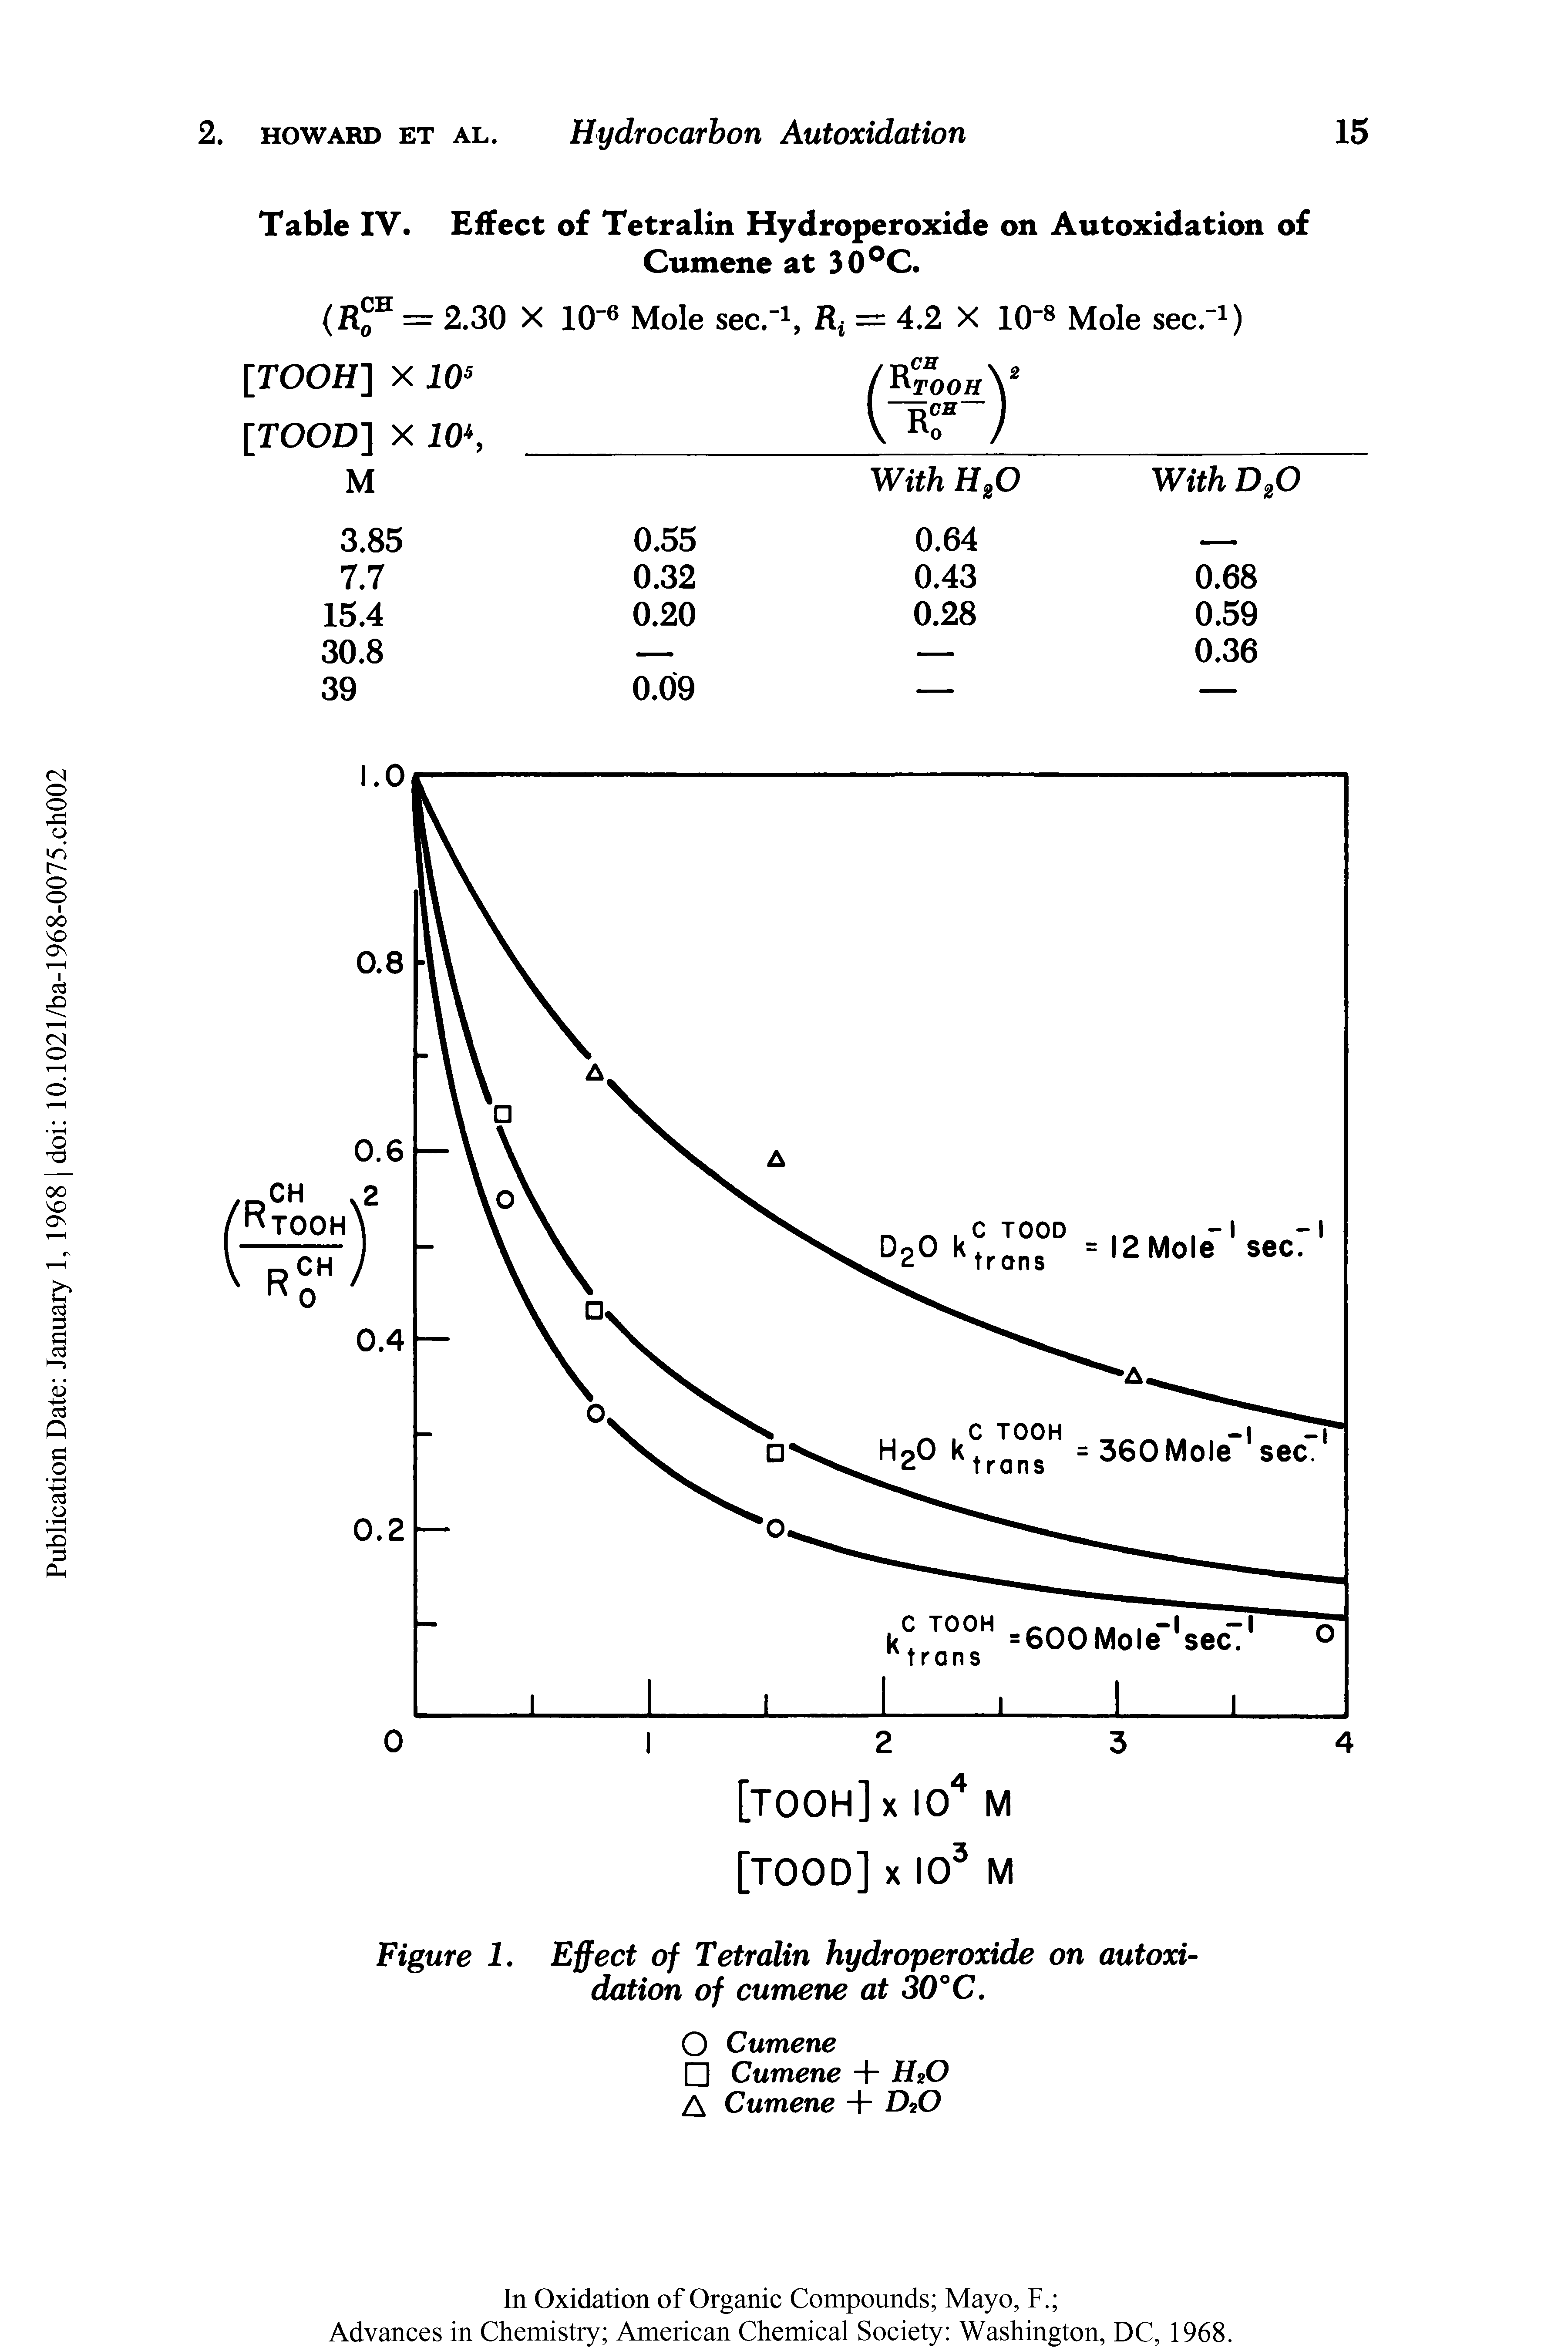 Figure 1. Effect of Tetralin hydroperoxide on autoxidation of cumene at 30°C.